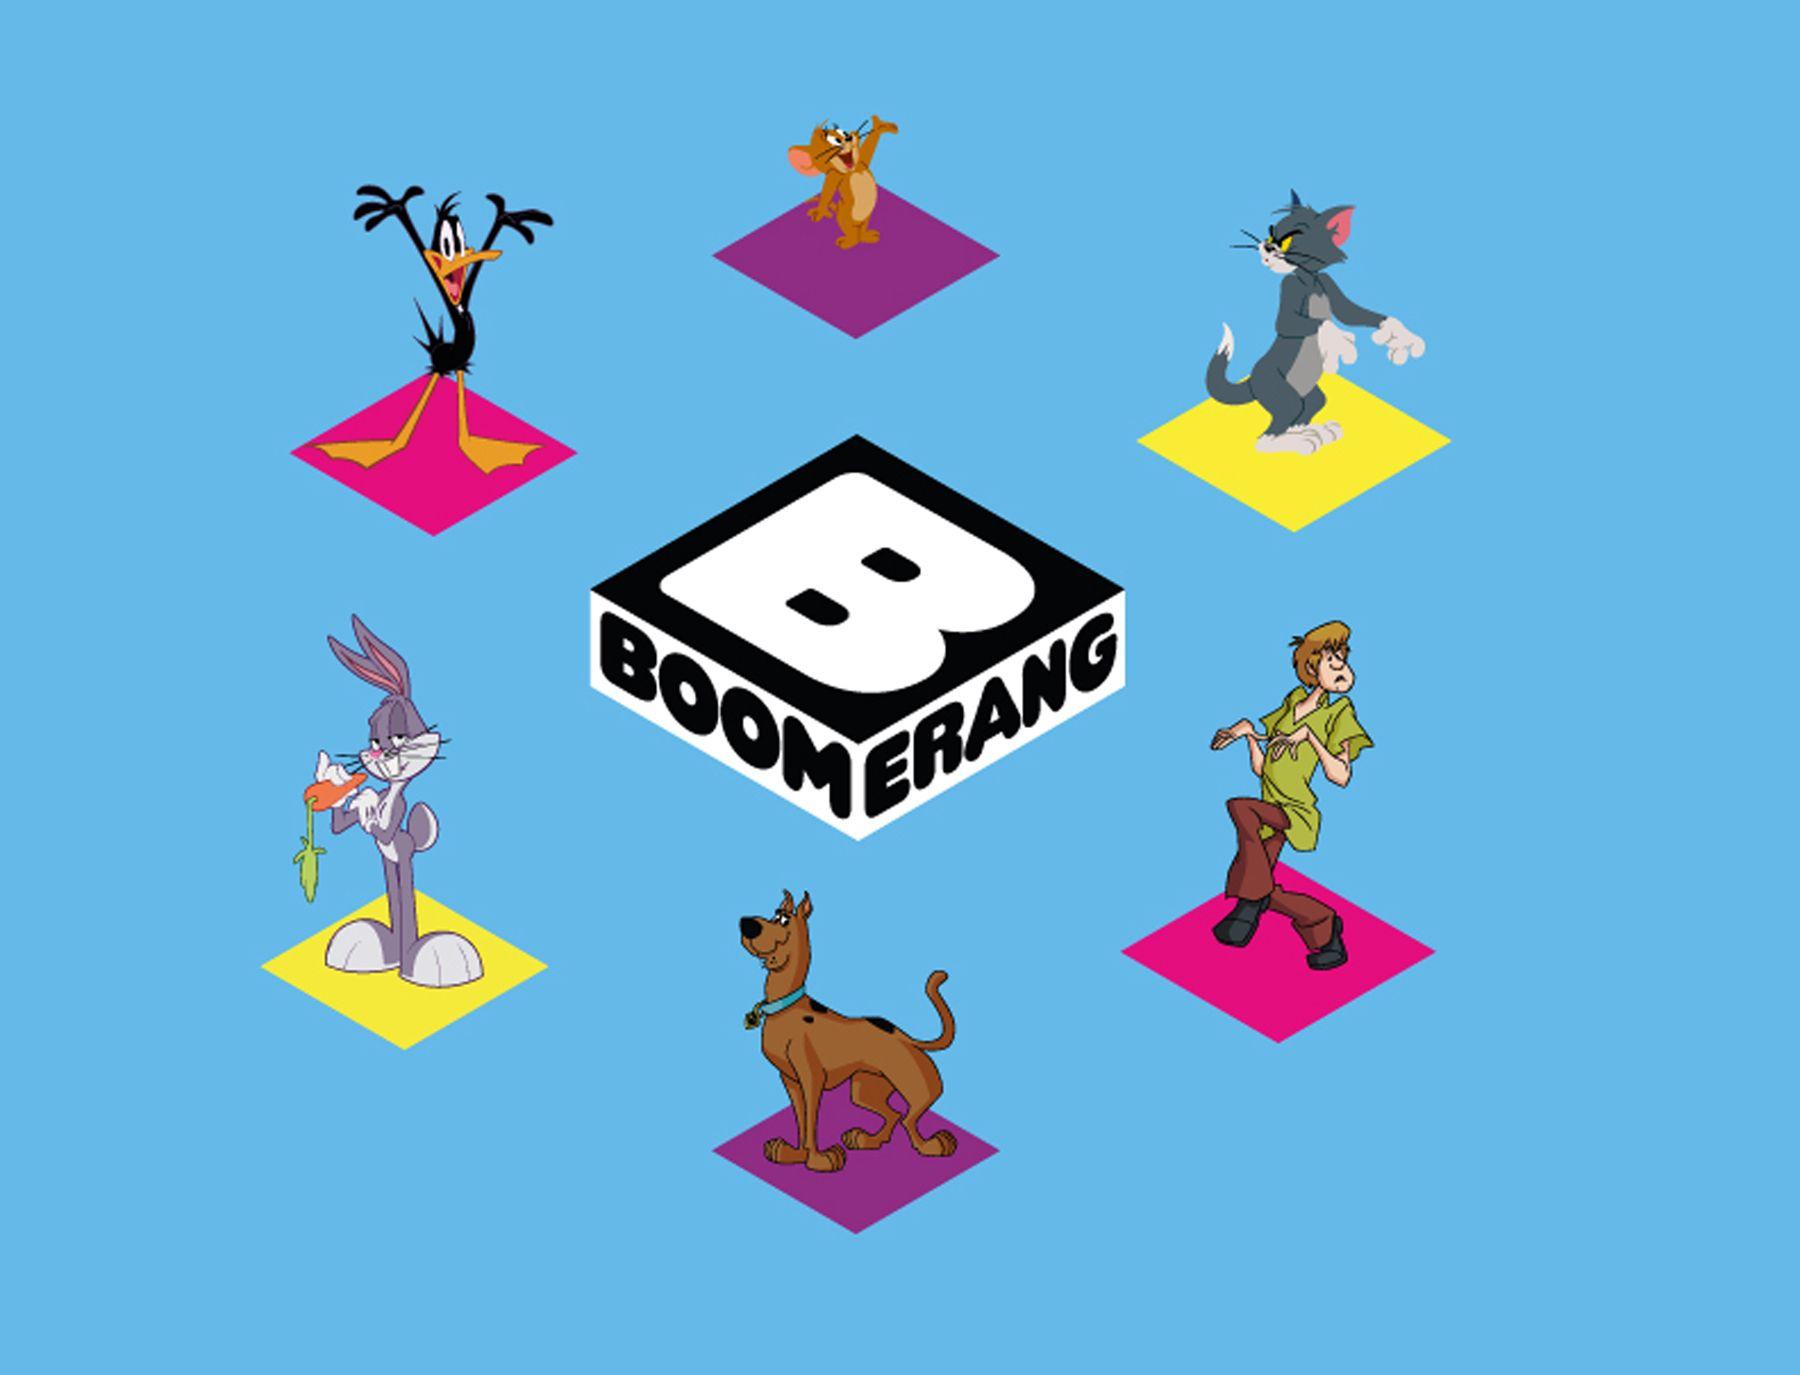 Boomerang Us Logo - Turner Broadcasting Re Launches Kids Brand, Boomerang